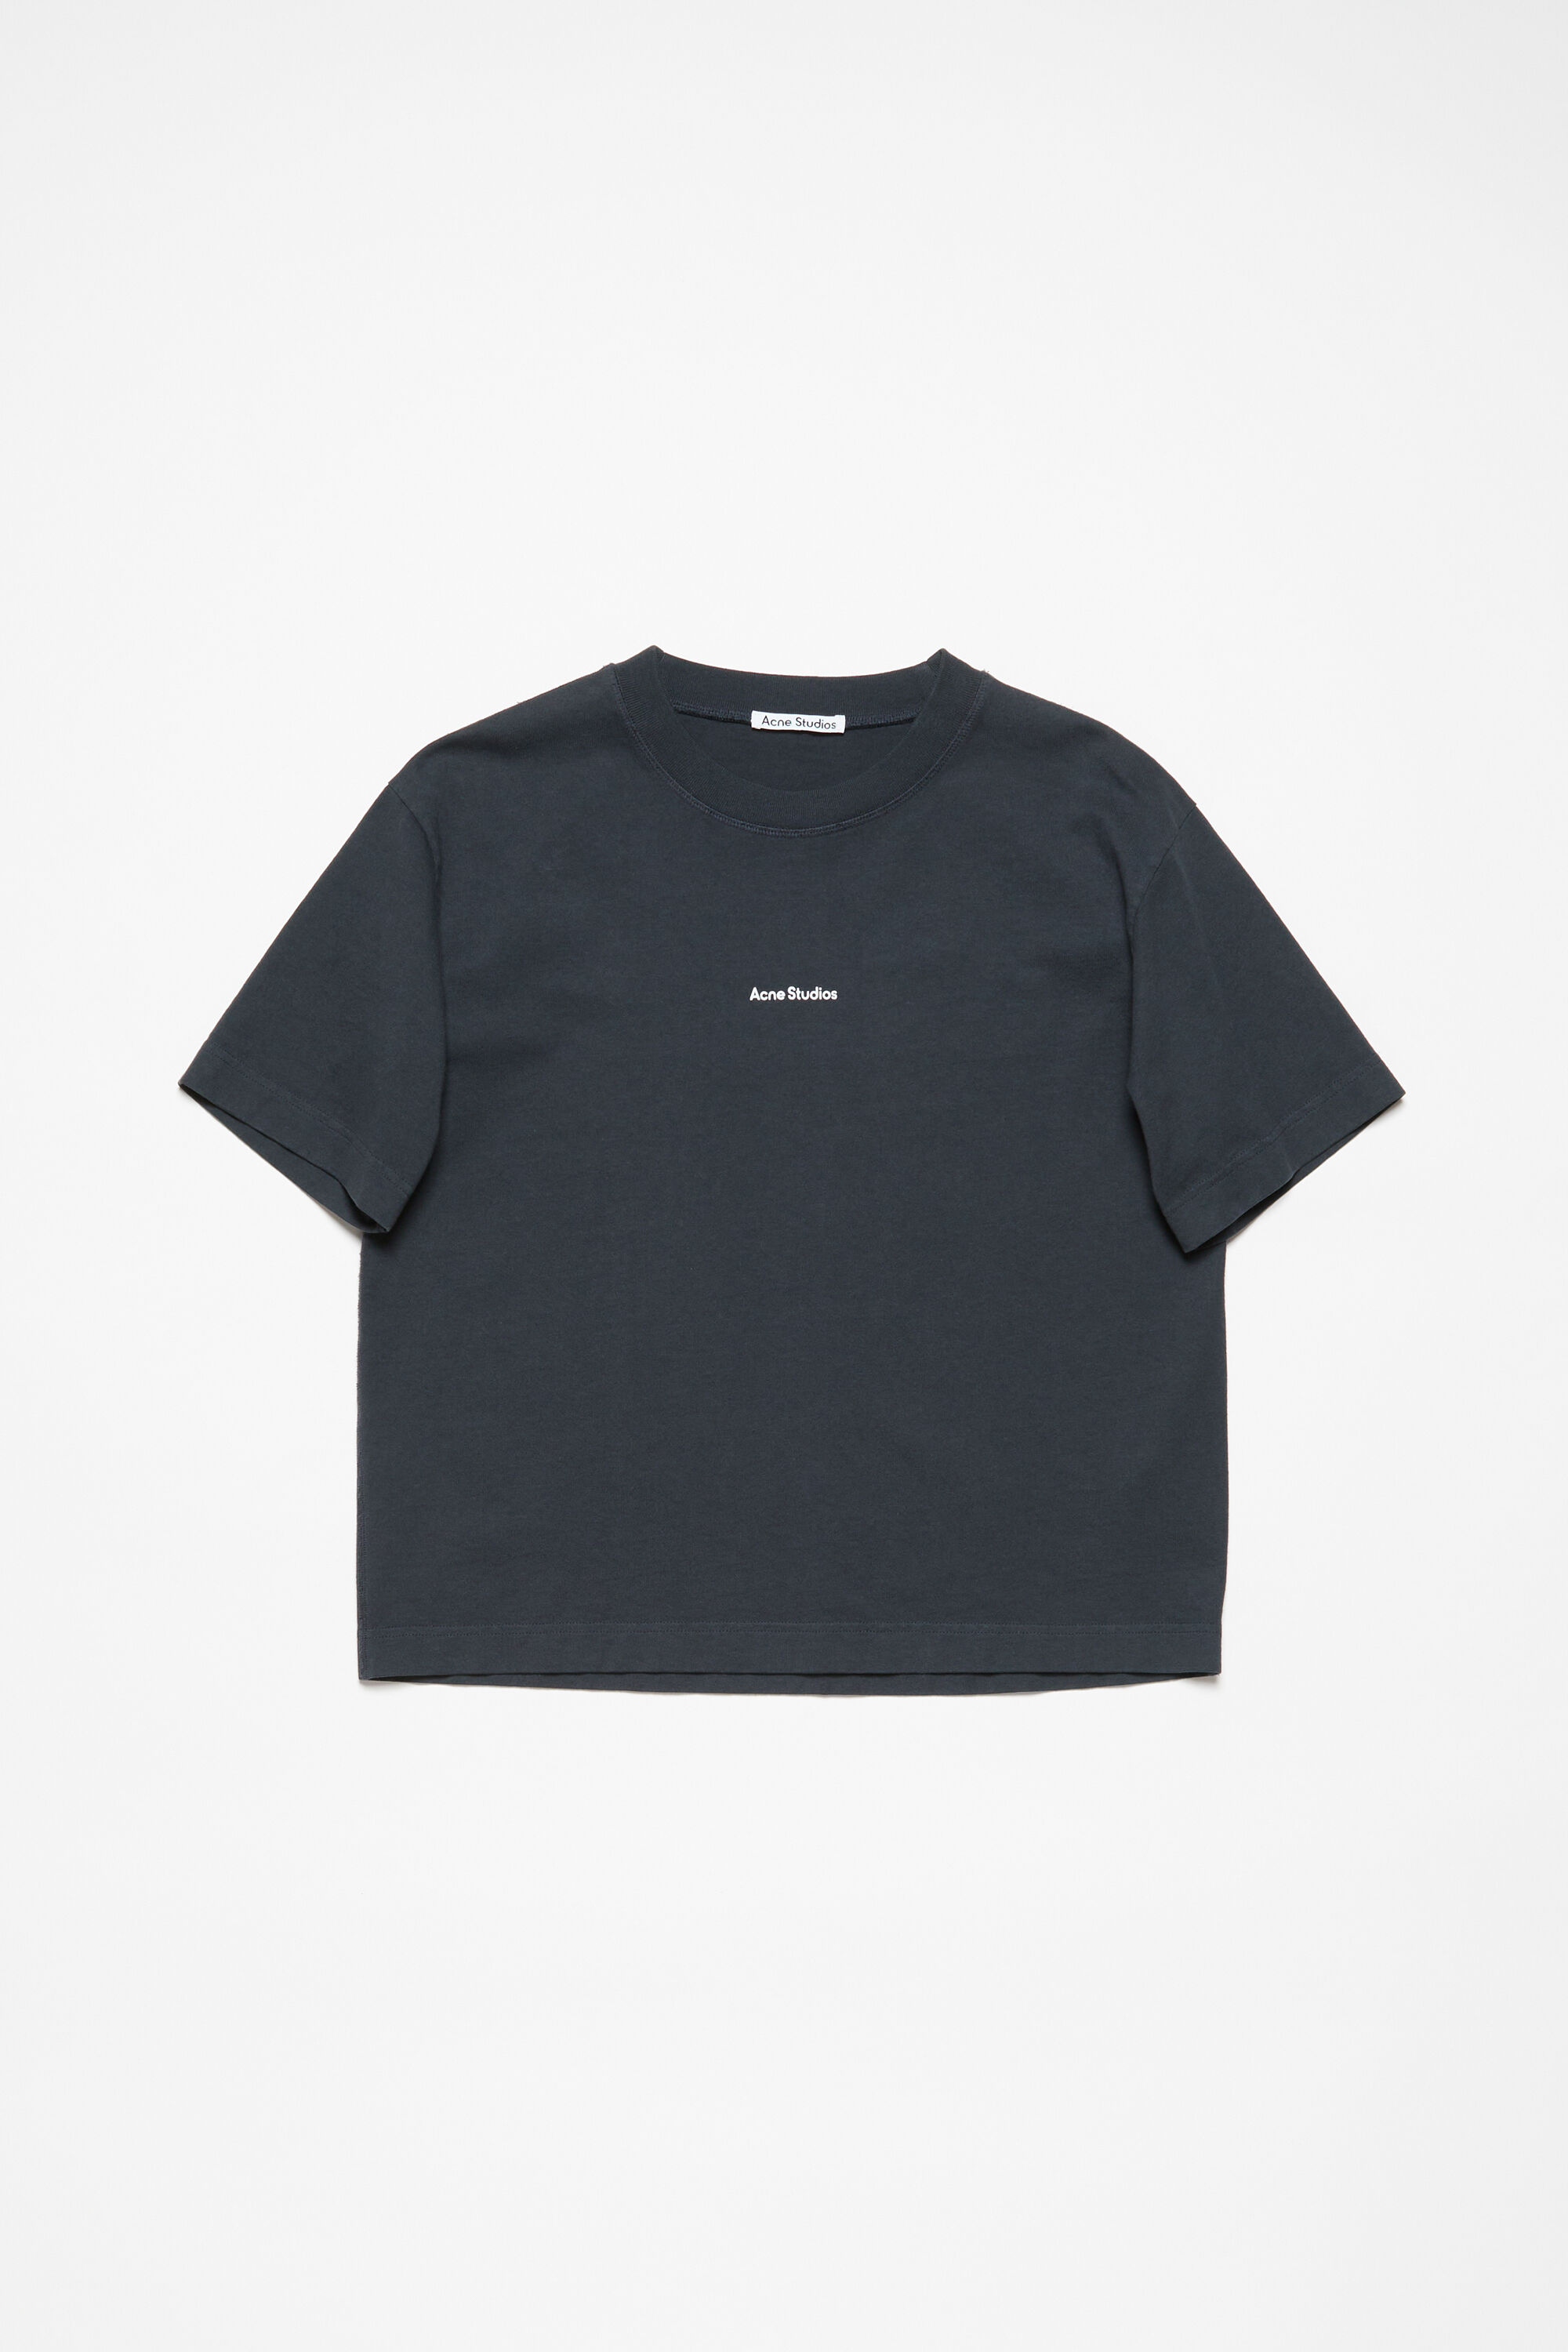 Acne Studios アクネストゥディオズ ロゴ TシャツTシャツ/カットソー(半袖/袖なし)